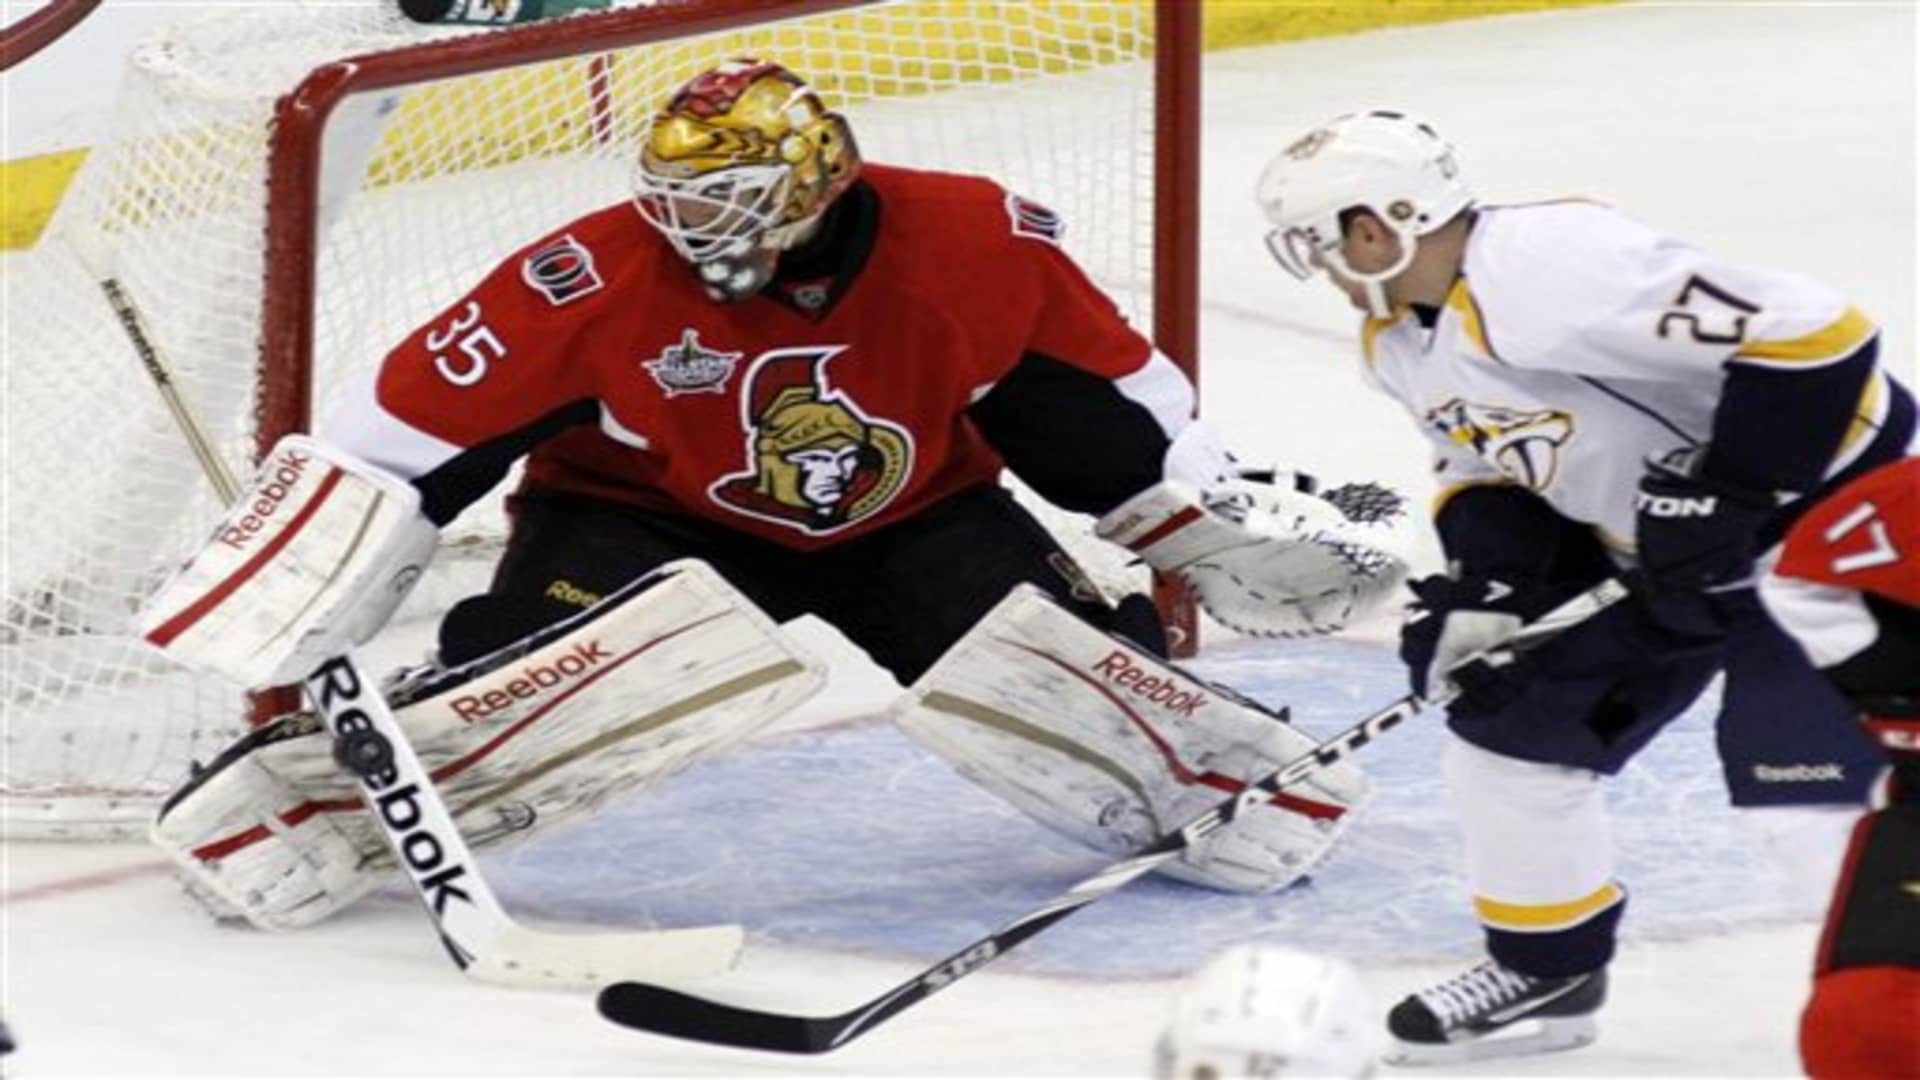 NHL’s Ottawa Senators reach deal with Toronto billionaire Michael Andlauer for record price